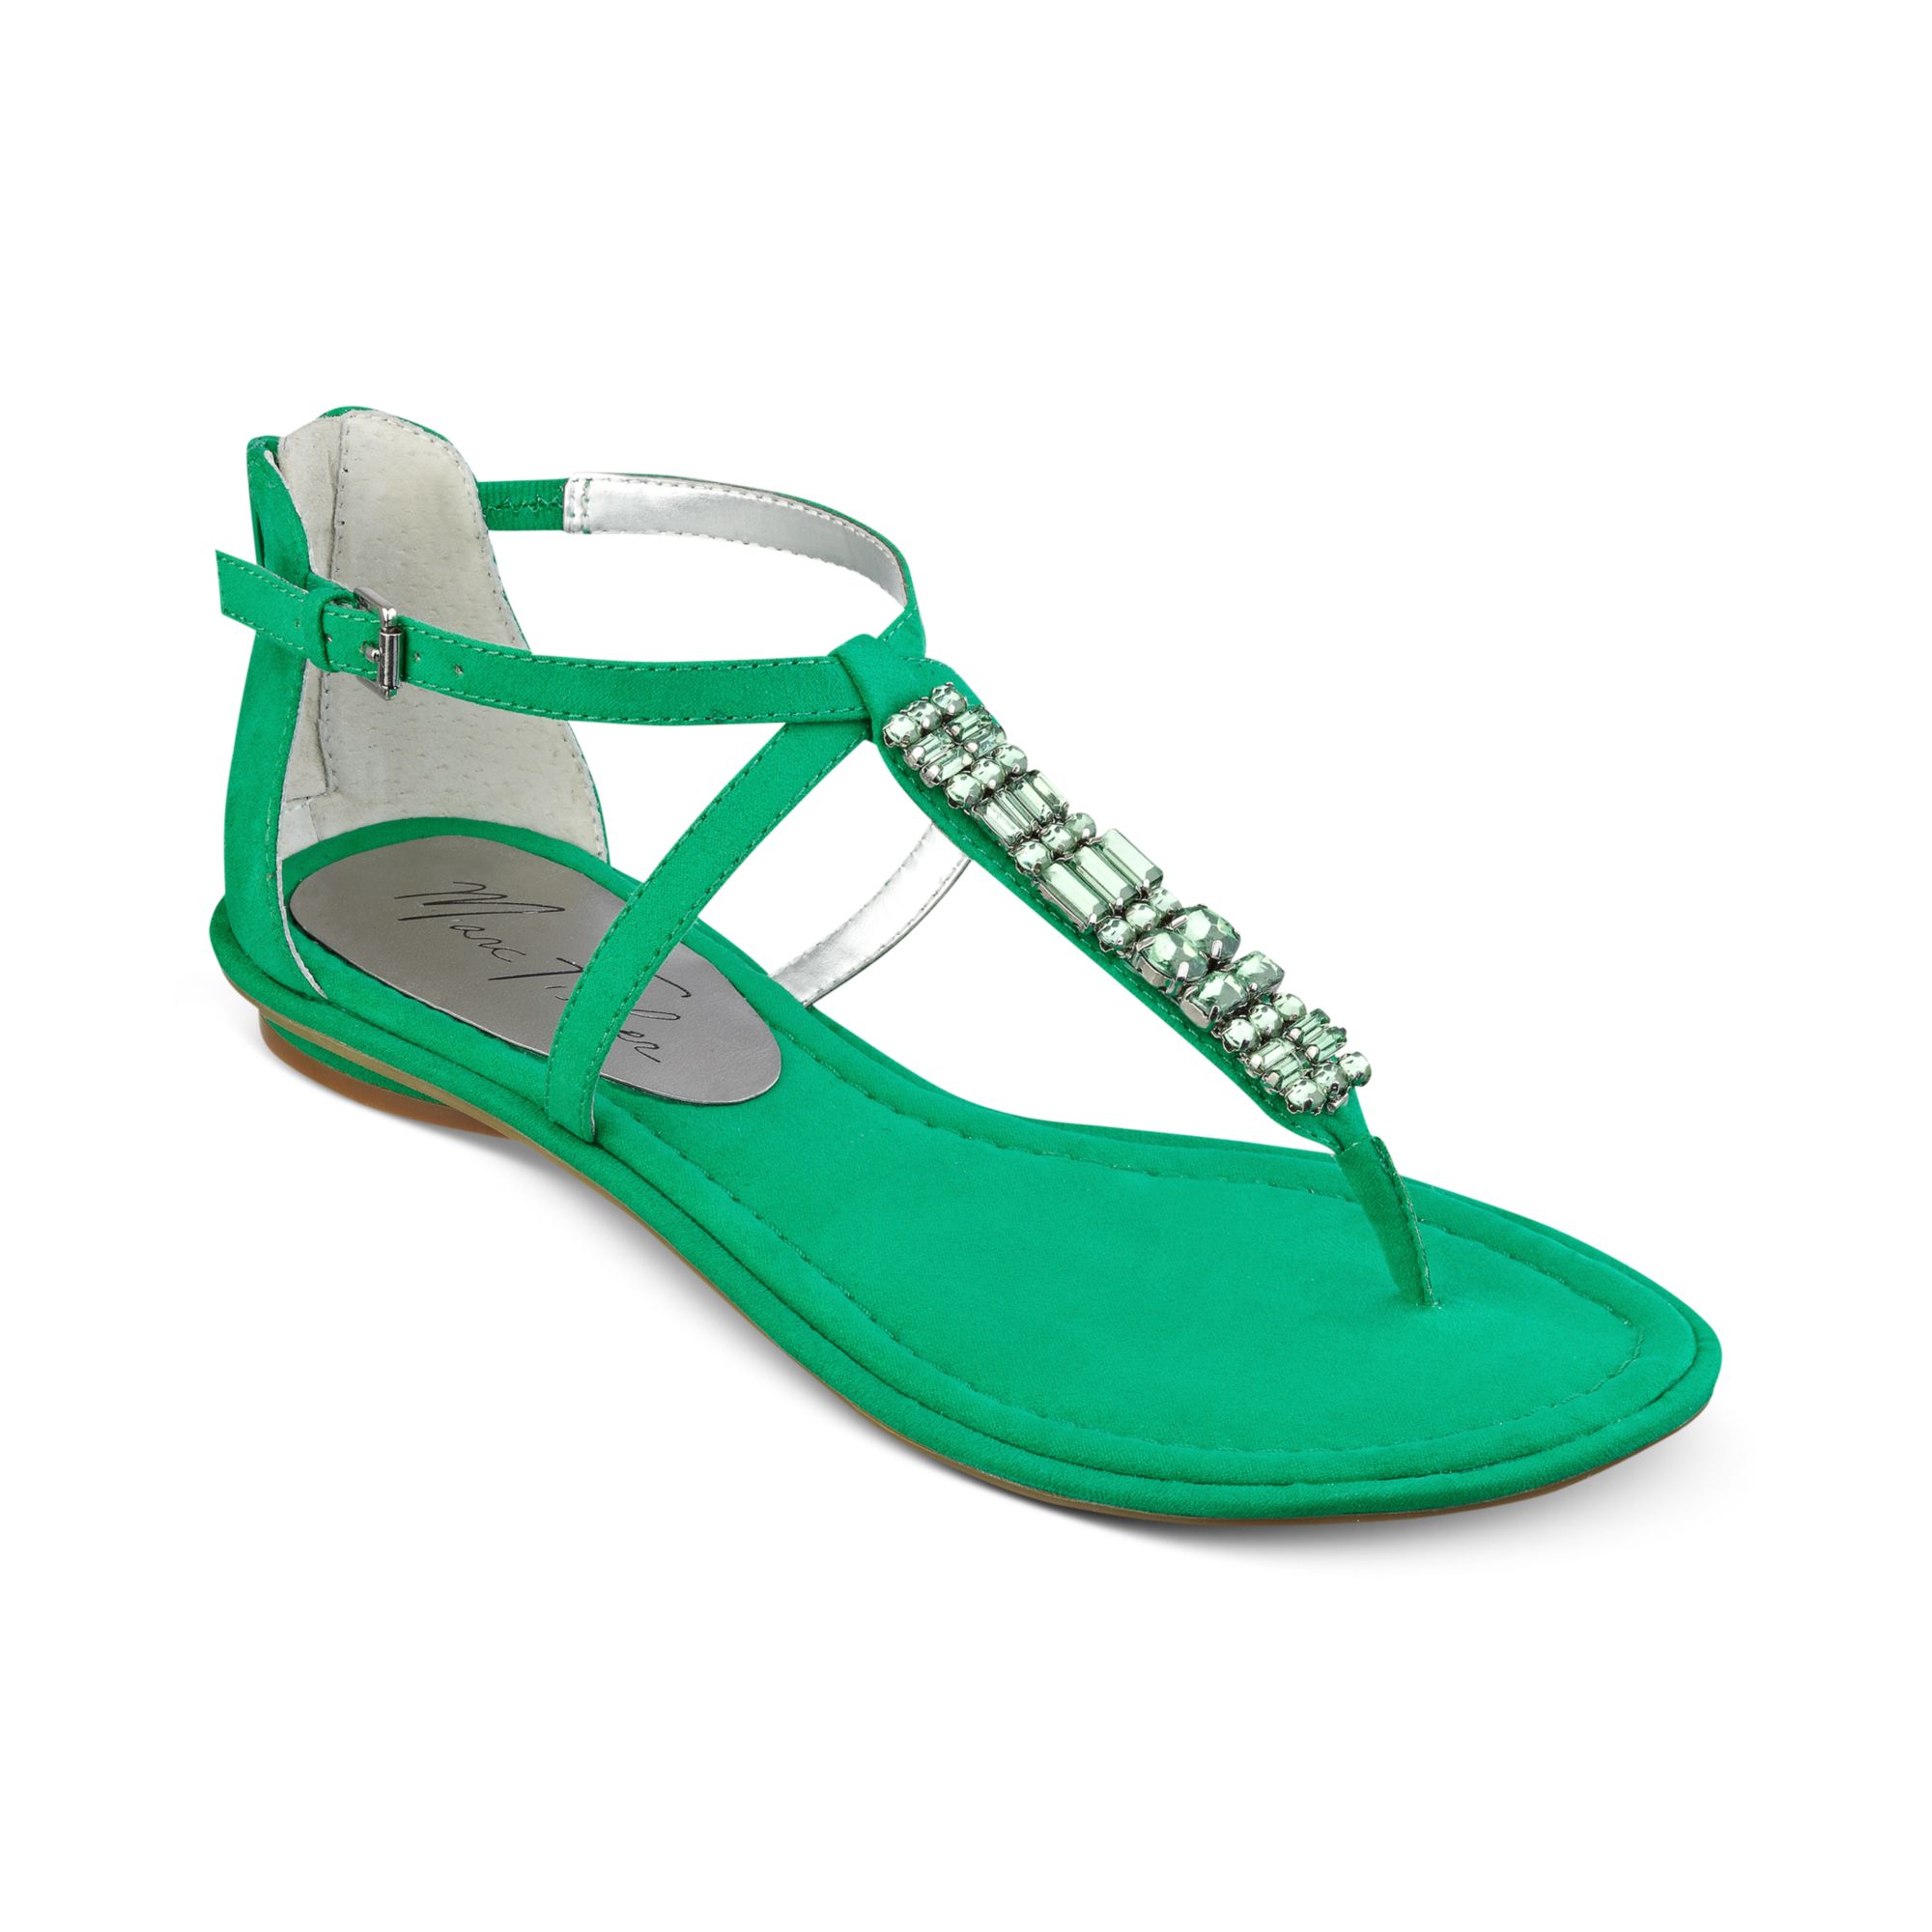 Buy > green sandals flat > in stock